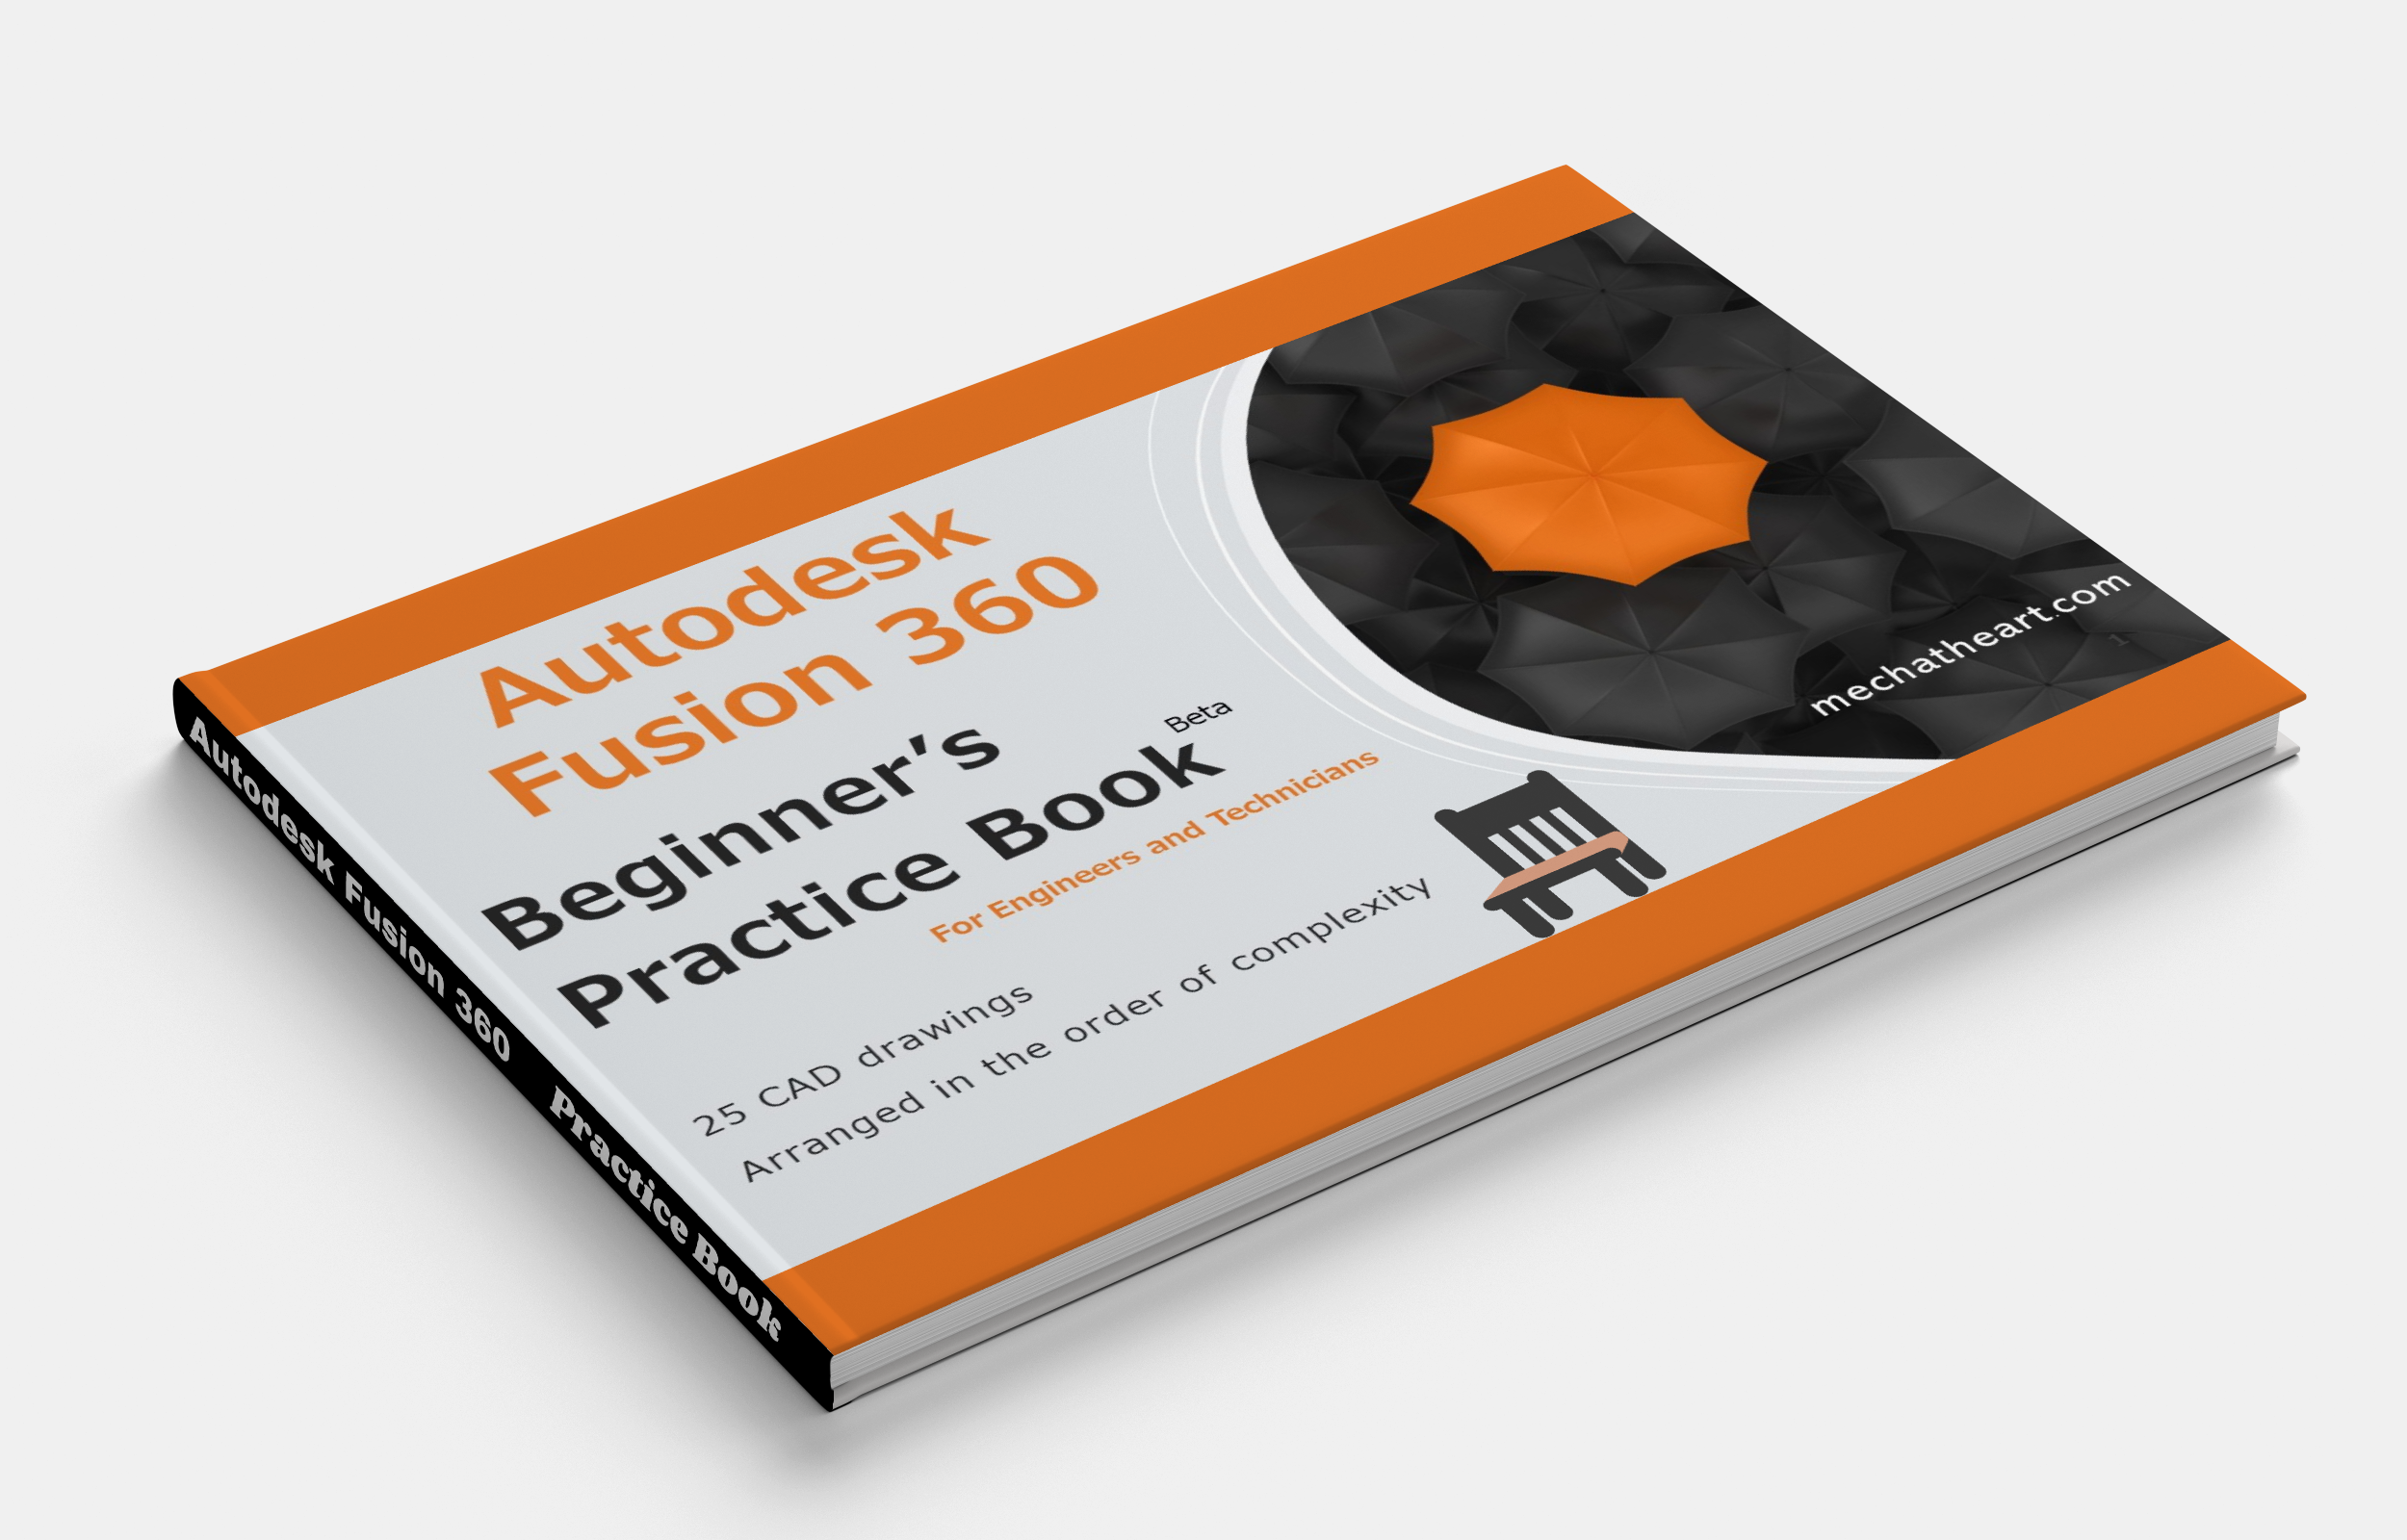 fusion 360 practice book